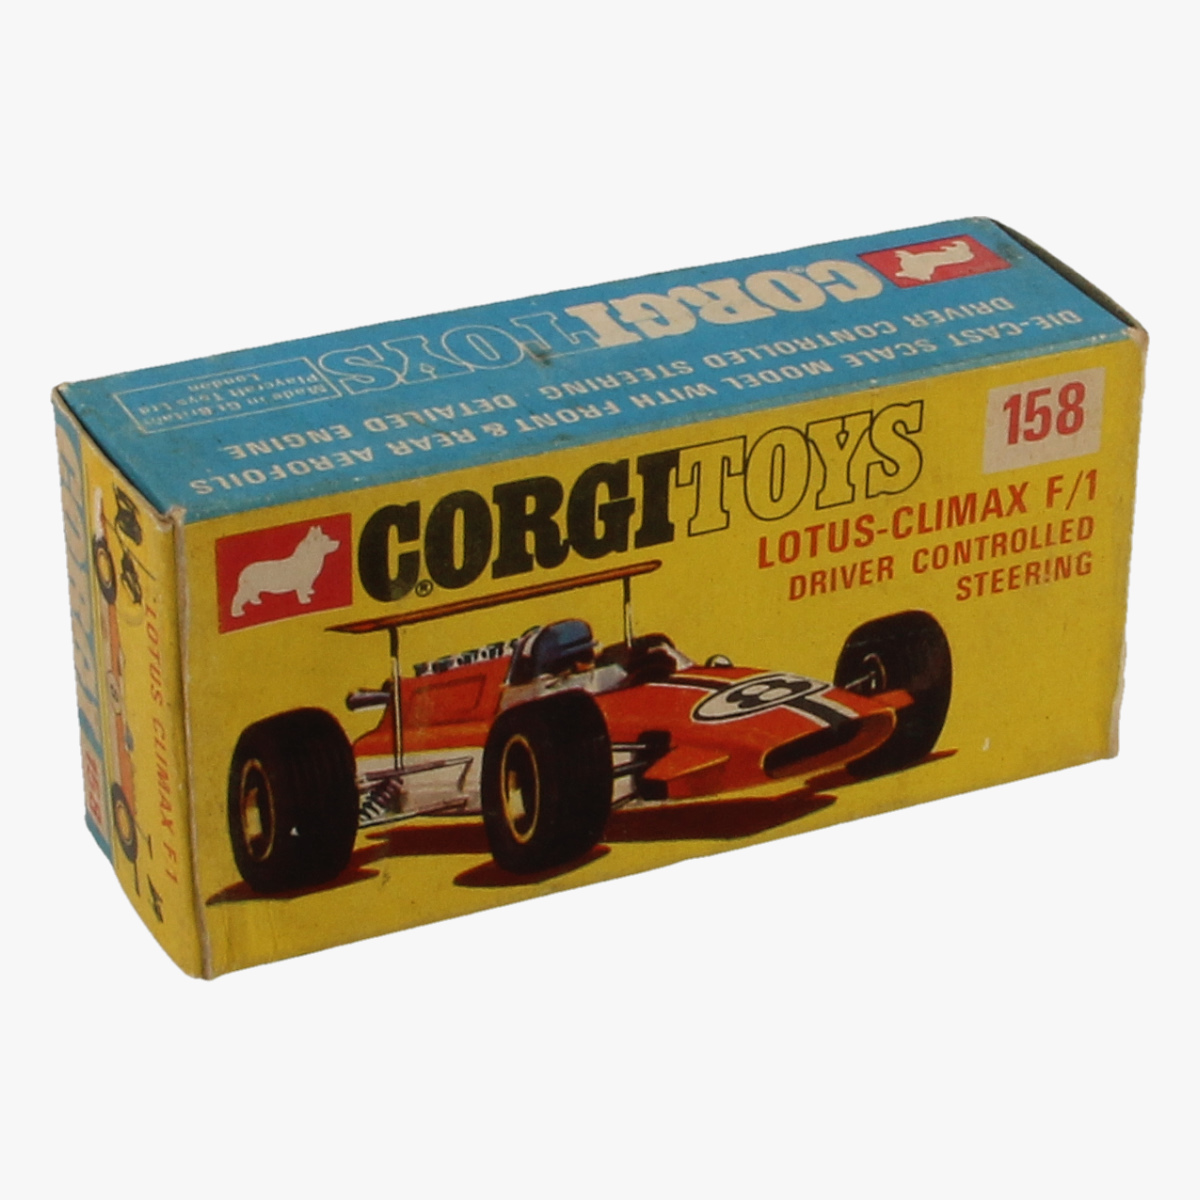 Afbeeldingen van Corgi Toys. Lotus Climax F/1. Nr. 158